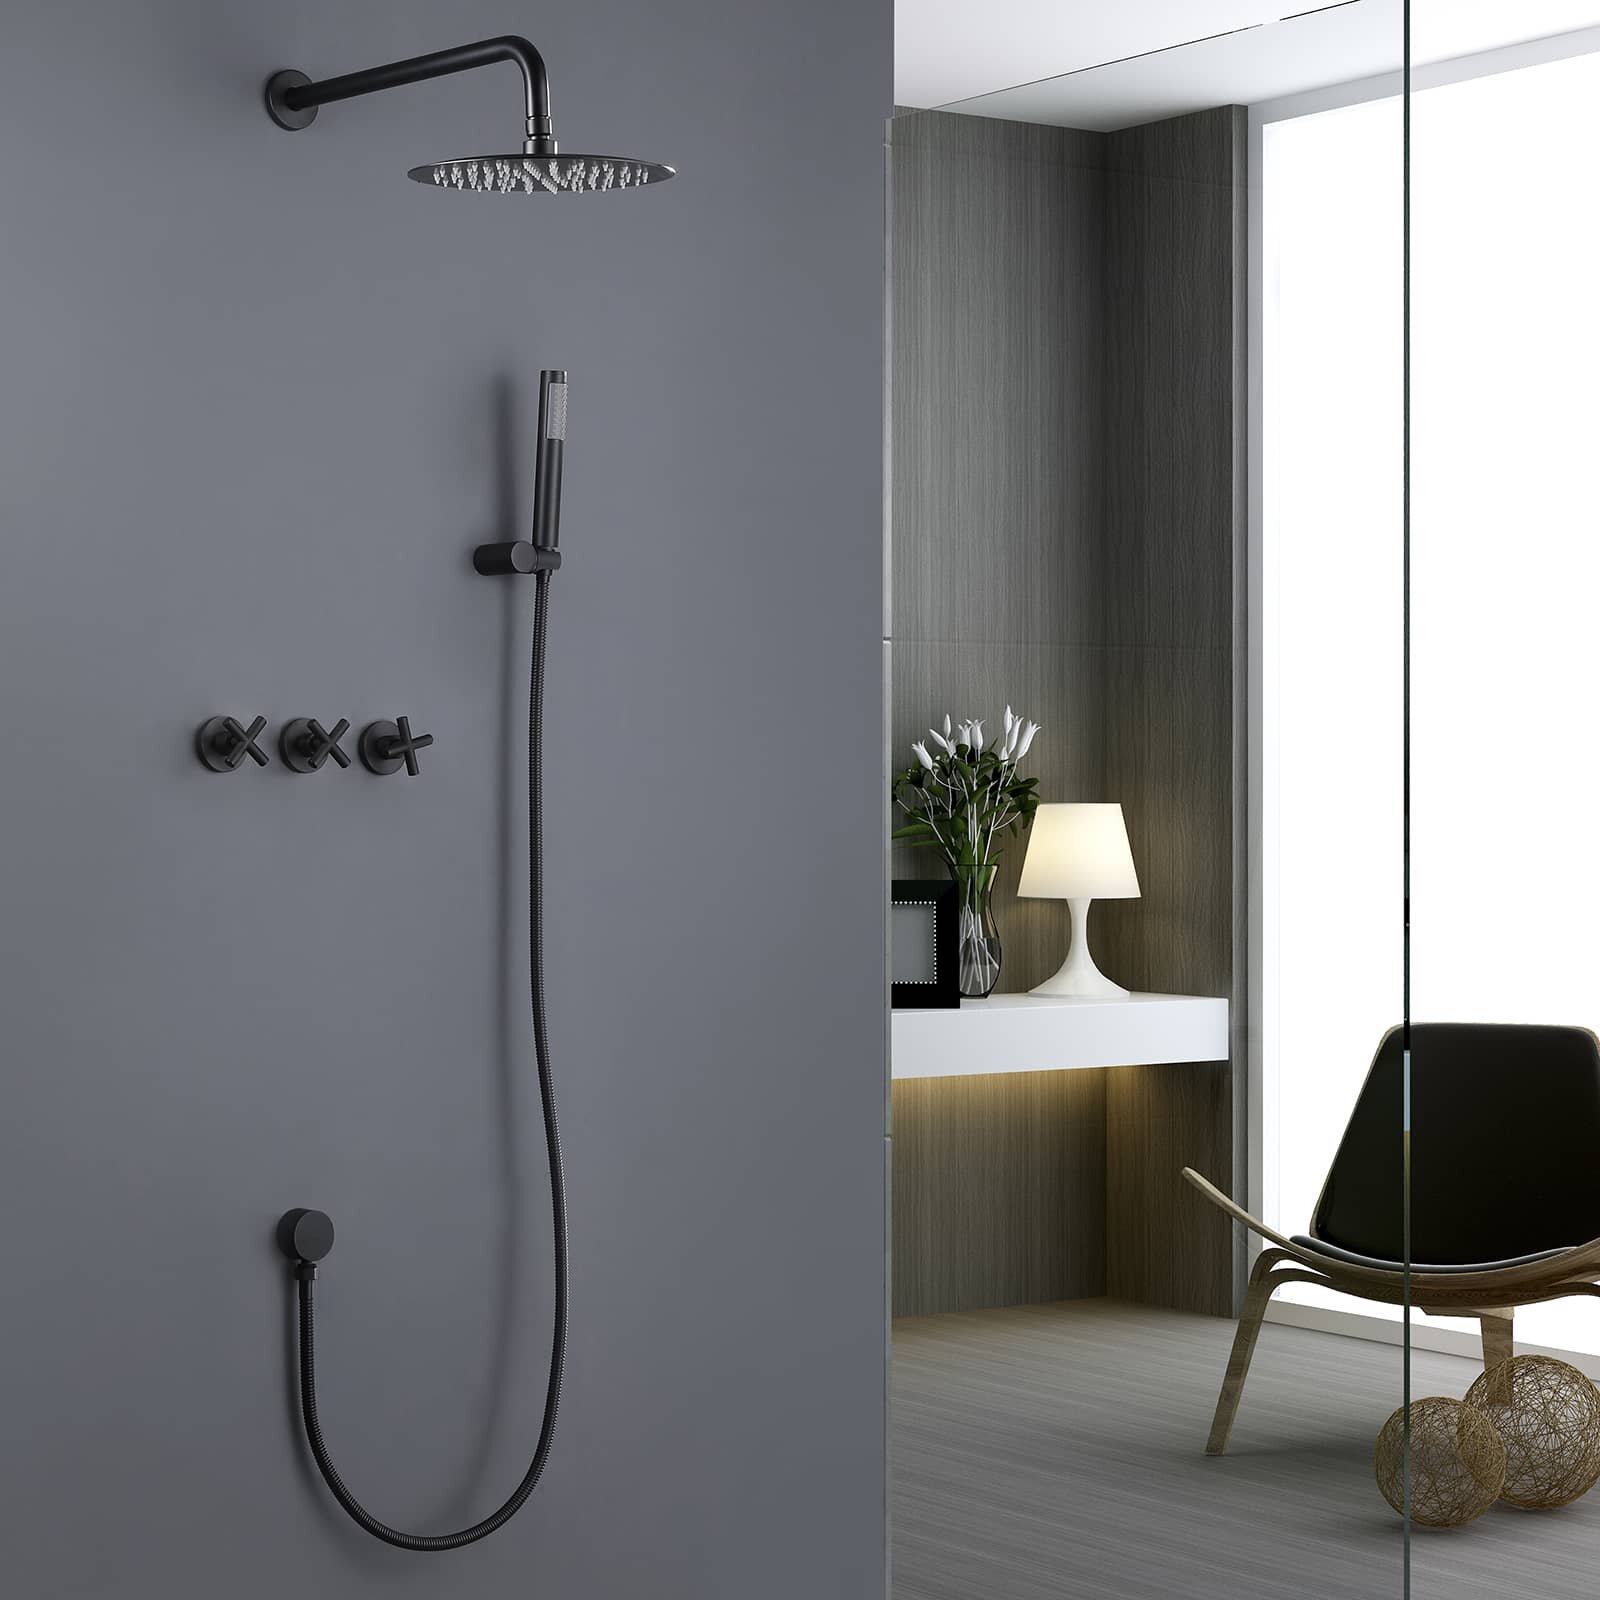 Cold & Hot Ceramic Decor Mixer Handle For Black Bathtub Hand Shower Faucet Set 